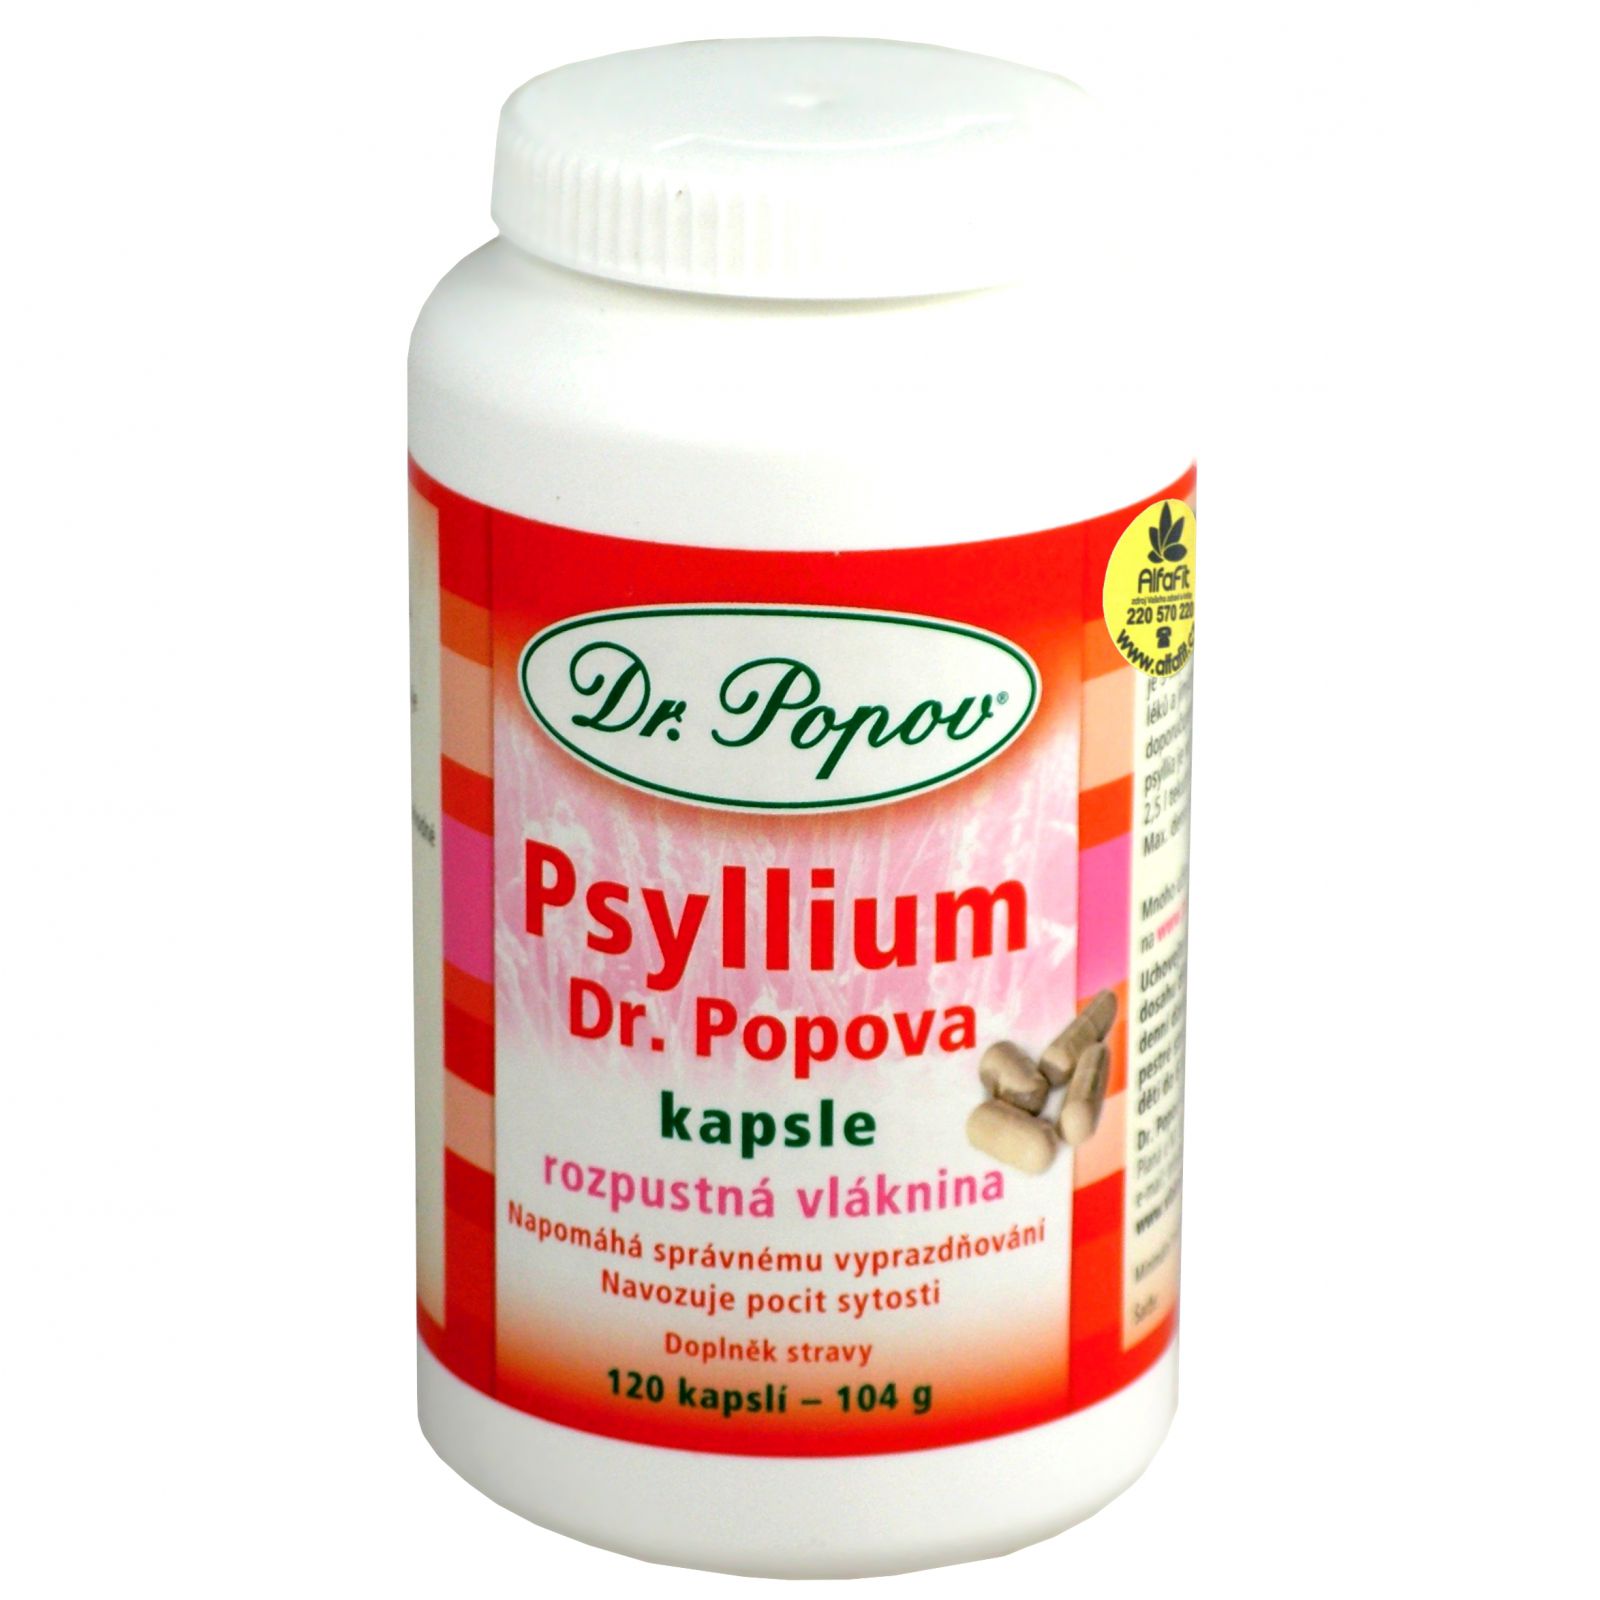 Dr. Popov Psyllium kapsle